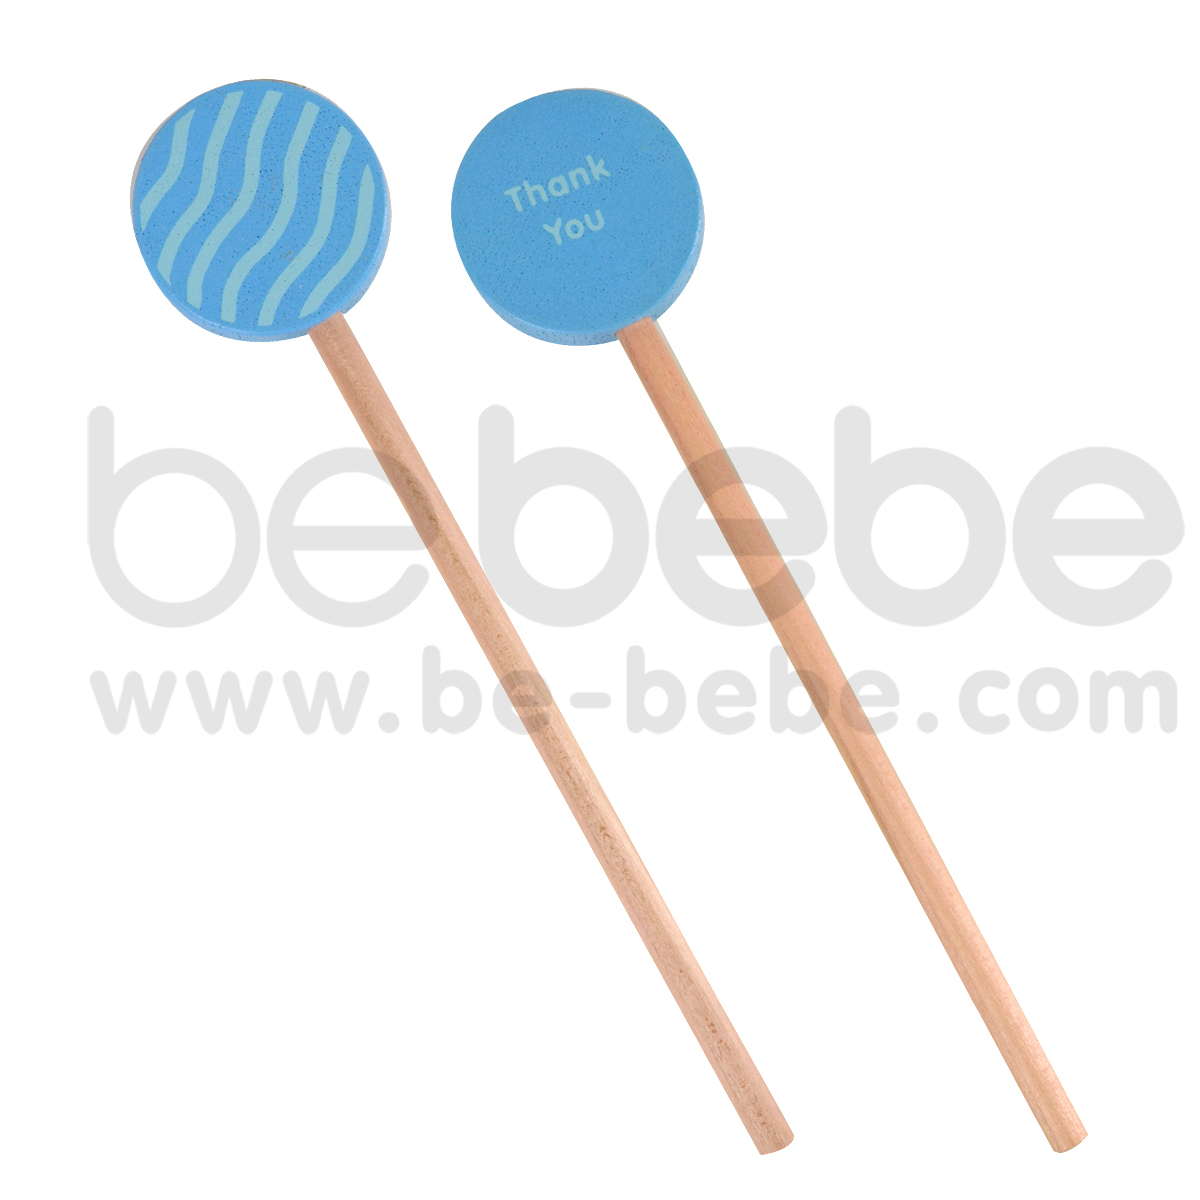 bebebe : Pencil-L-Circle-Thank You/Blue